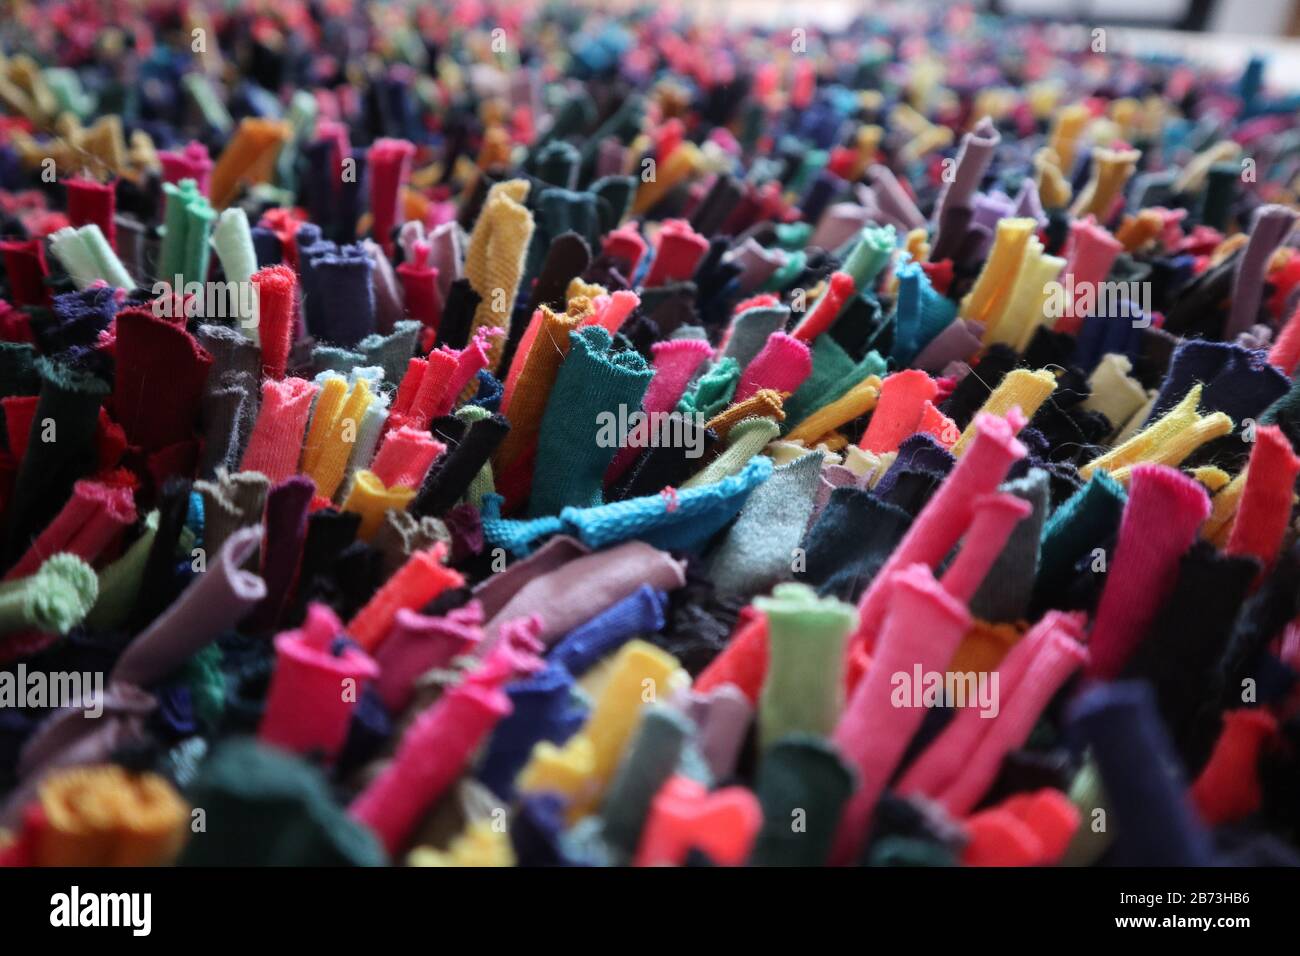 Tshirt colorful rug close-up Stock Photo